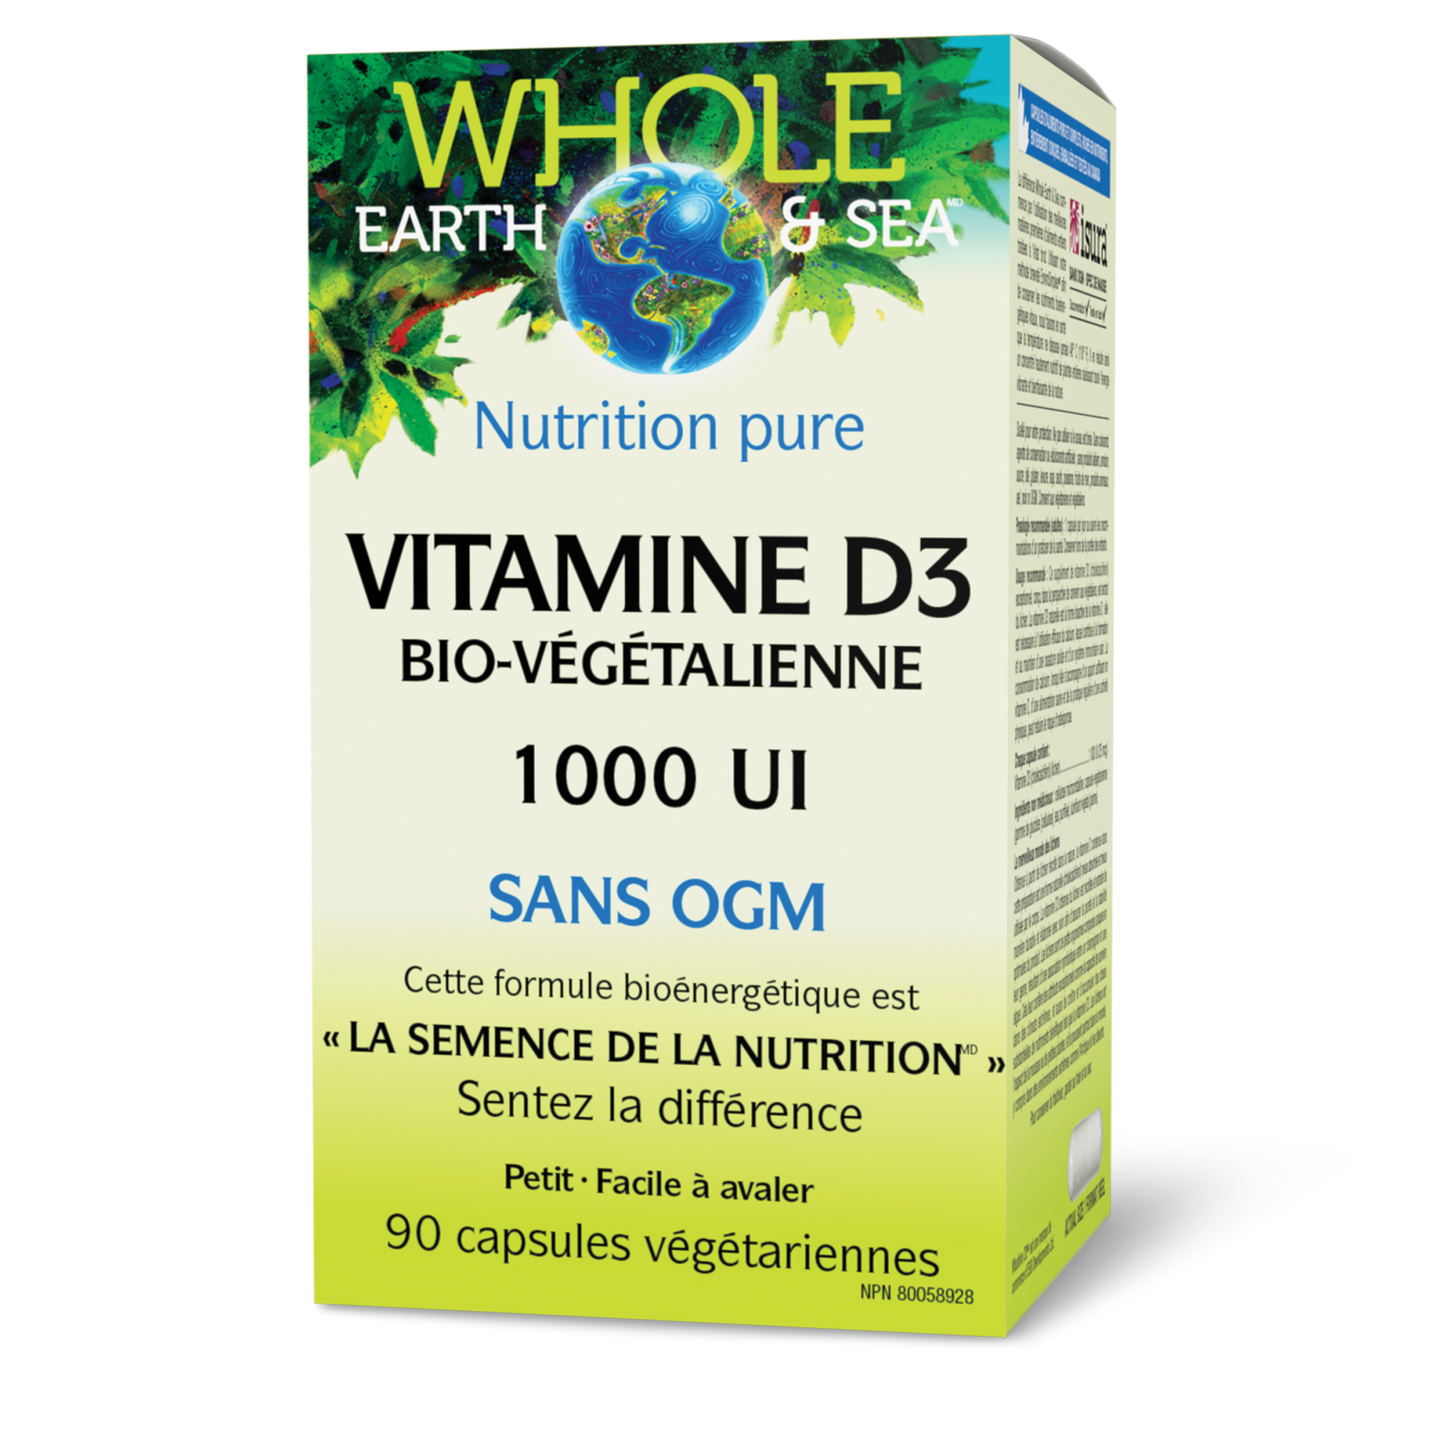 Vitamine D3 bio-végétalienne 1 000 UI, Whole Earth & Sea, Whole Earth & Sea®|v|image|35512